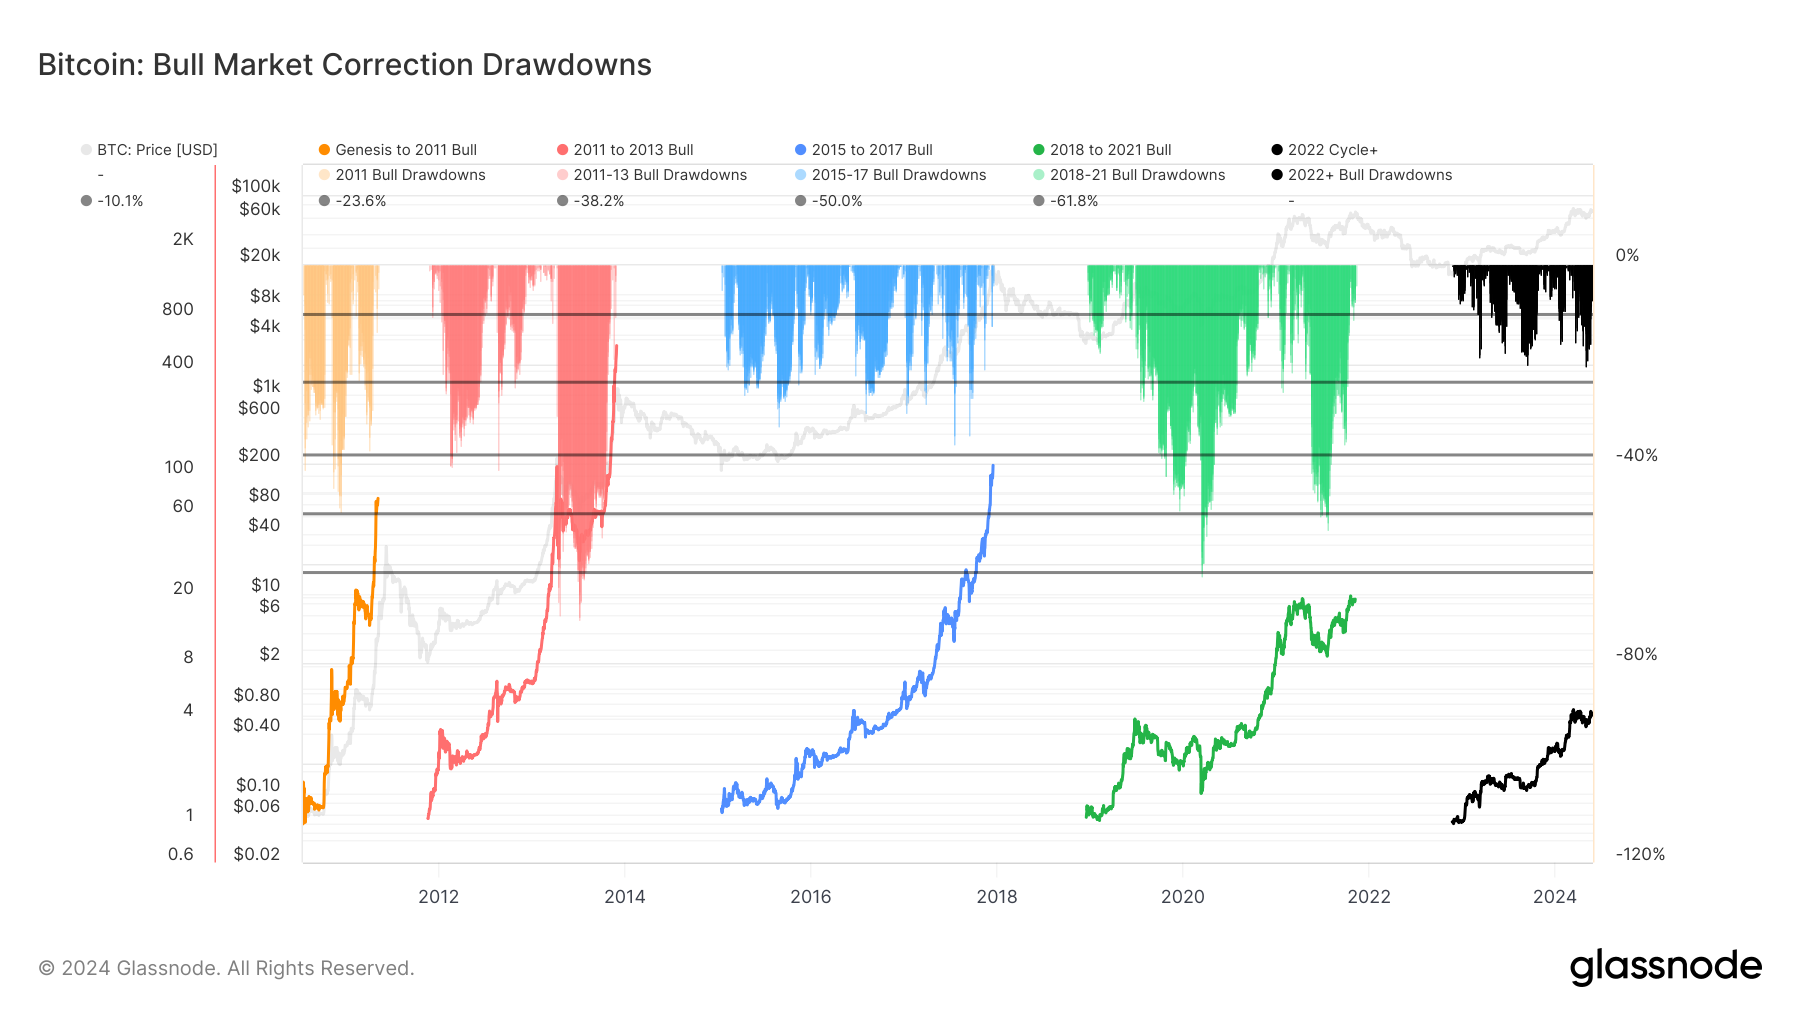 BTC Bull Market Correction Drawdowns chart